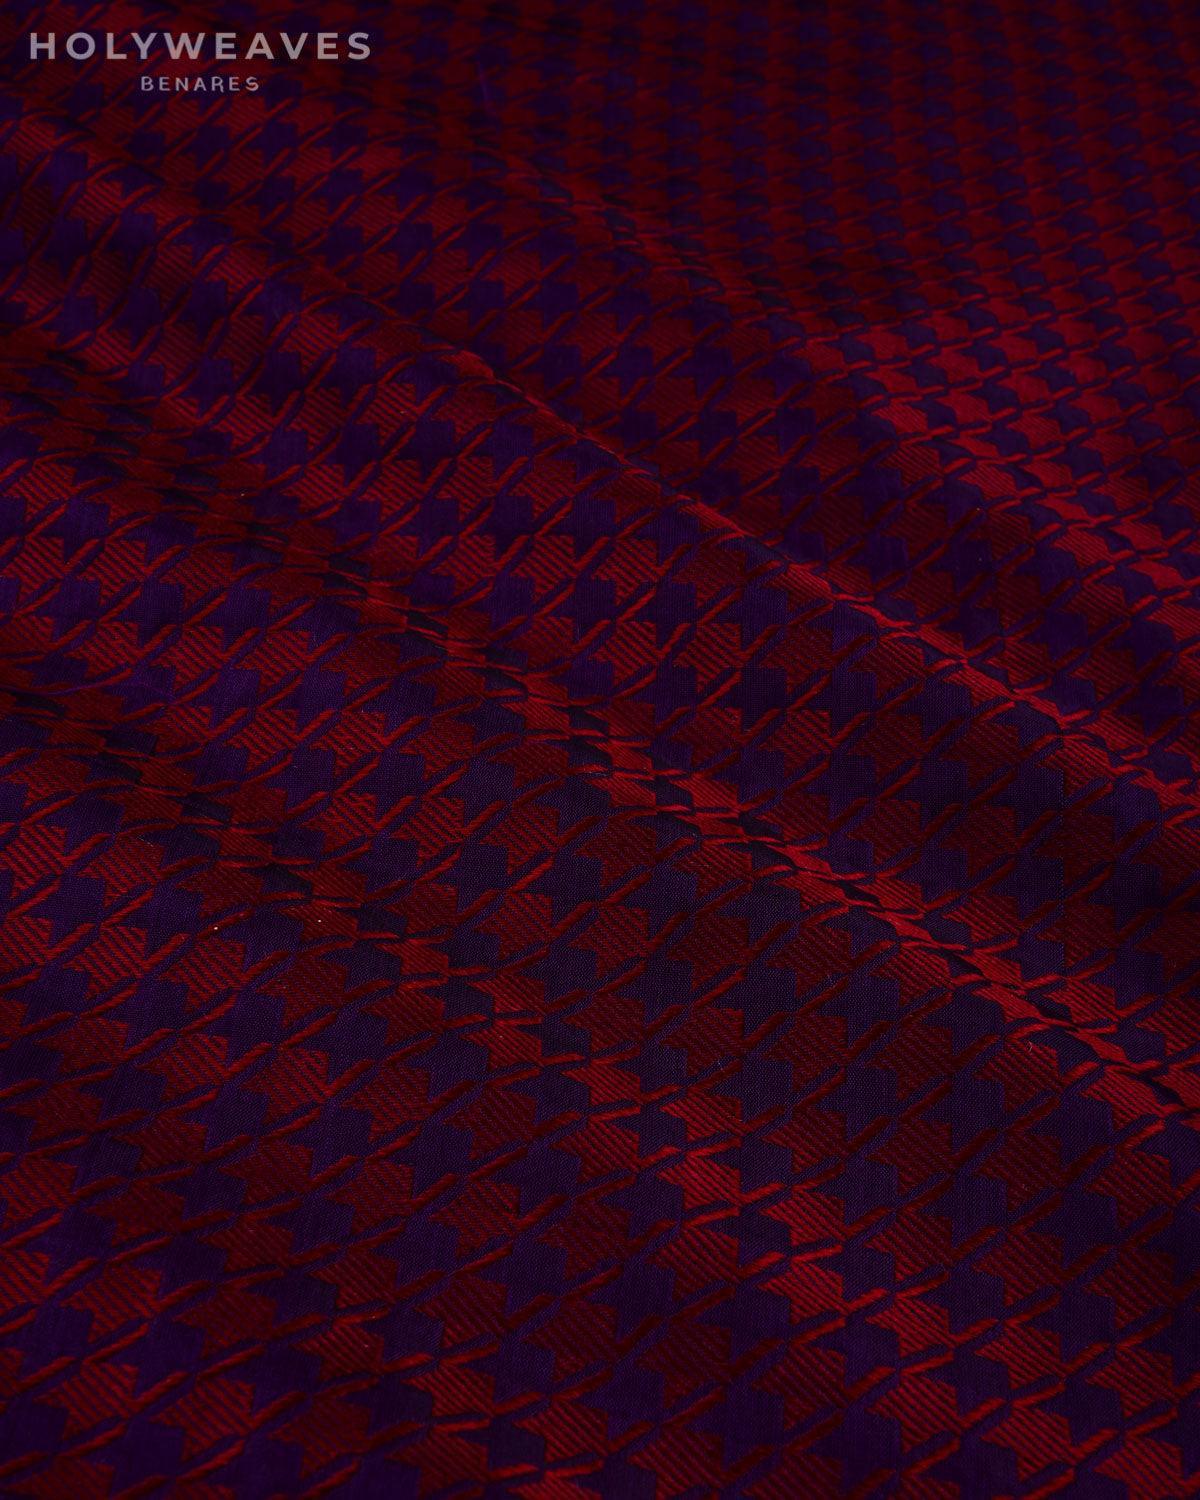 Maroon on Purple Banarasi Resham Houndstooth Brocade Handwoven Katan Silk Fabric - By HolyWeaves, Benares